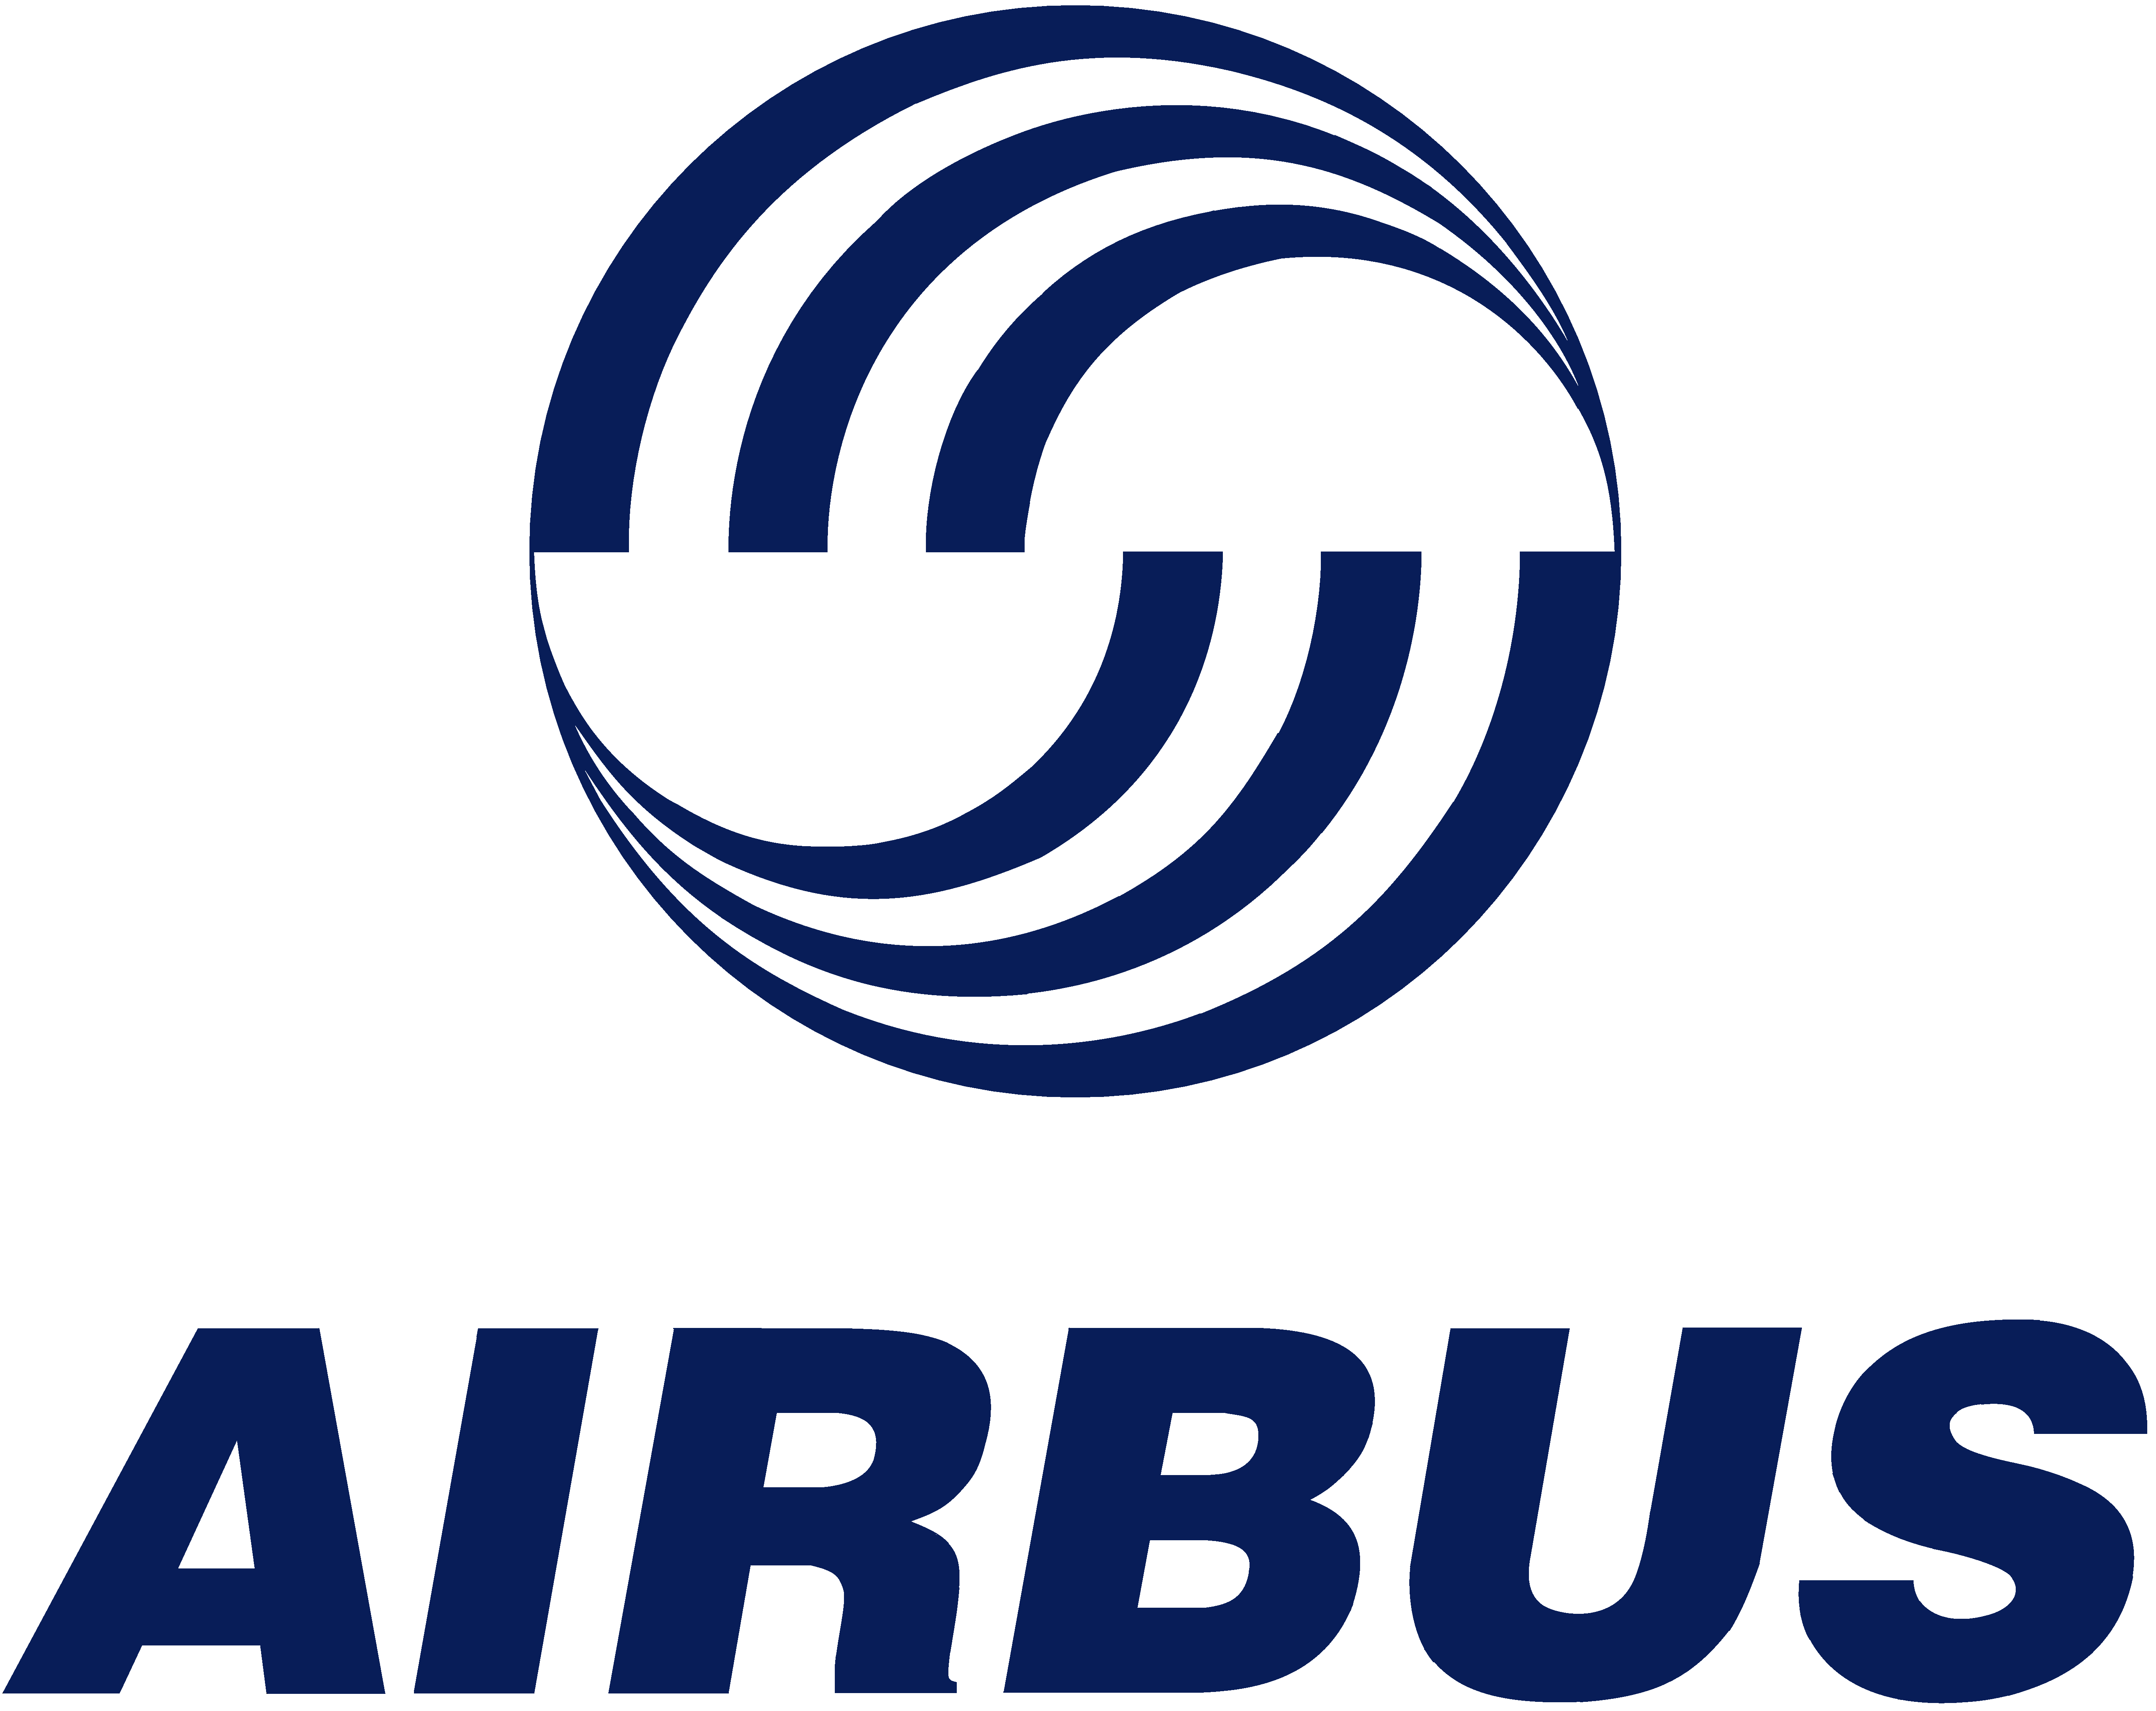 Airbus : Simulation de flux-optimisation de fluxsimulation de flux et optimisation de flux 